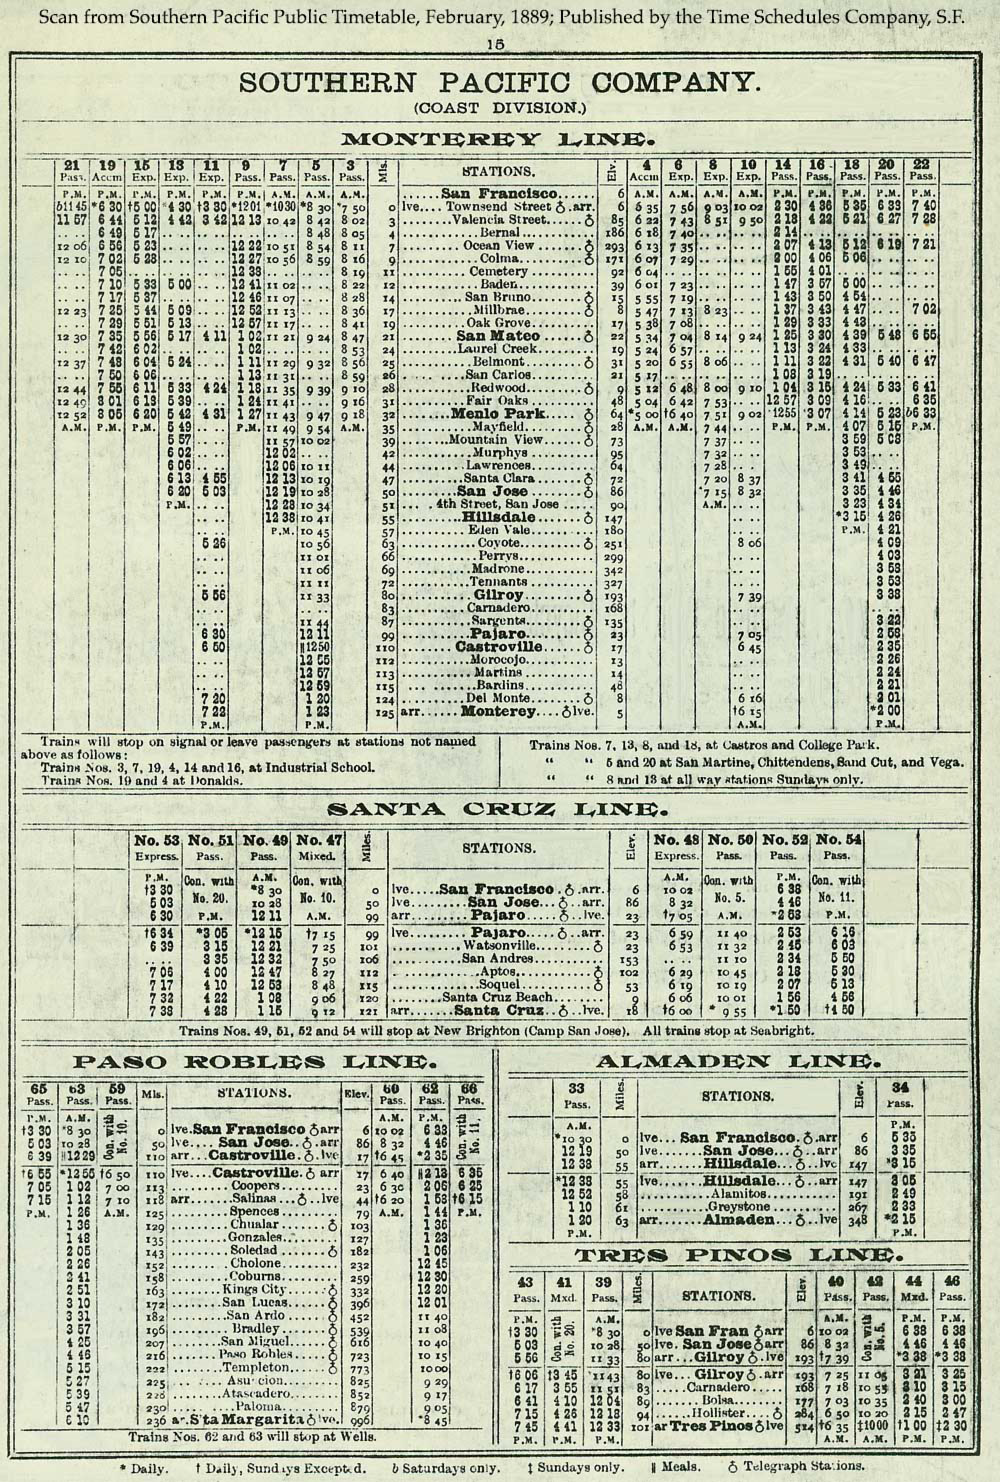 Union Pacific Twin Cities Area Employee Timetable #3 DEC 17 2007 UPRR ETT